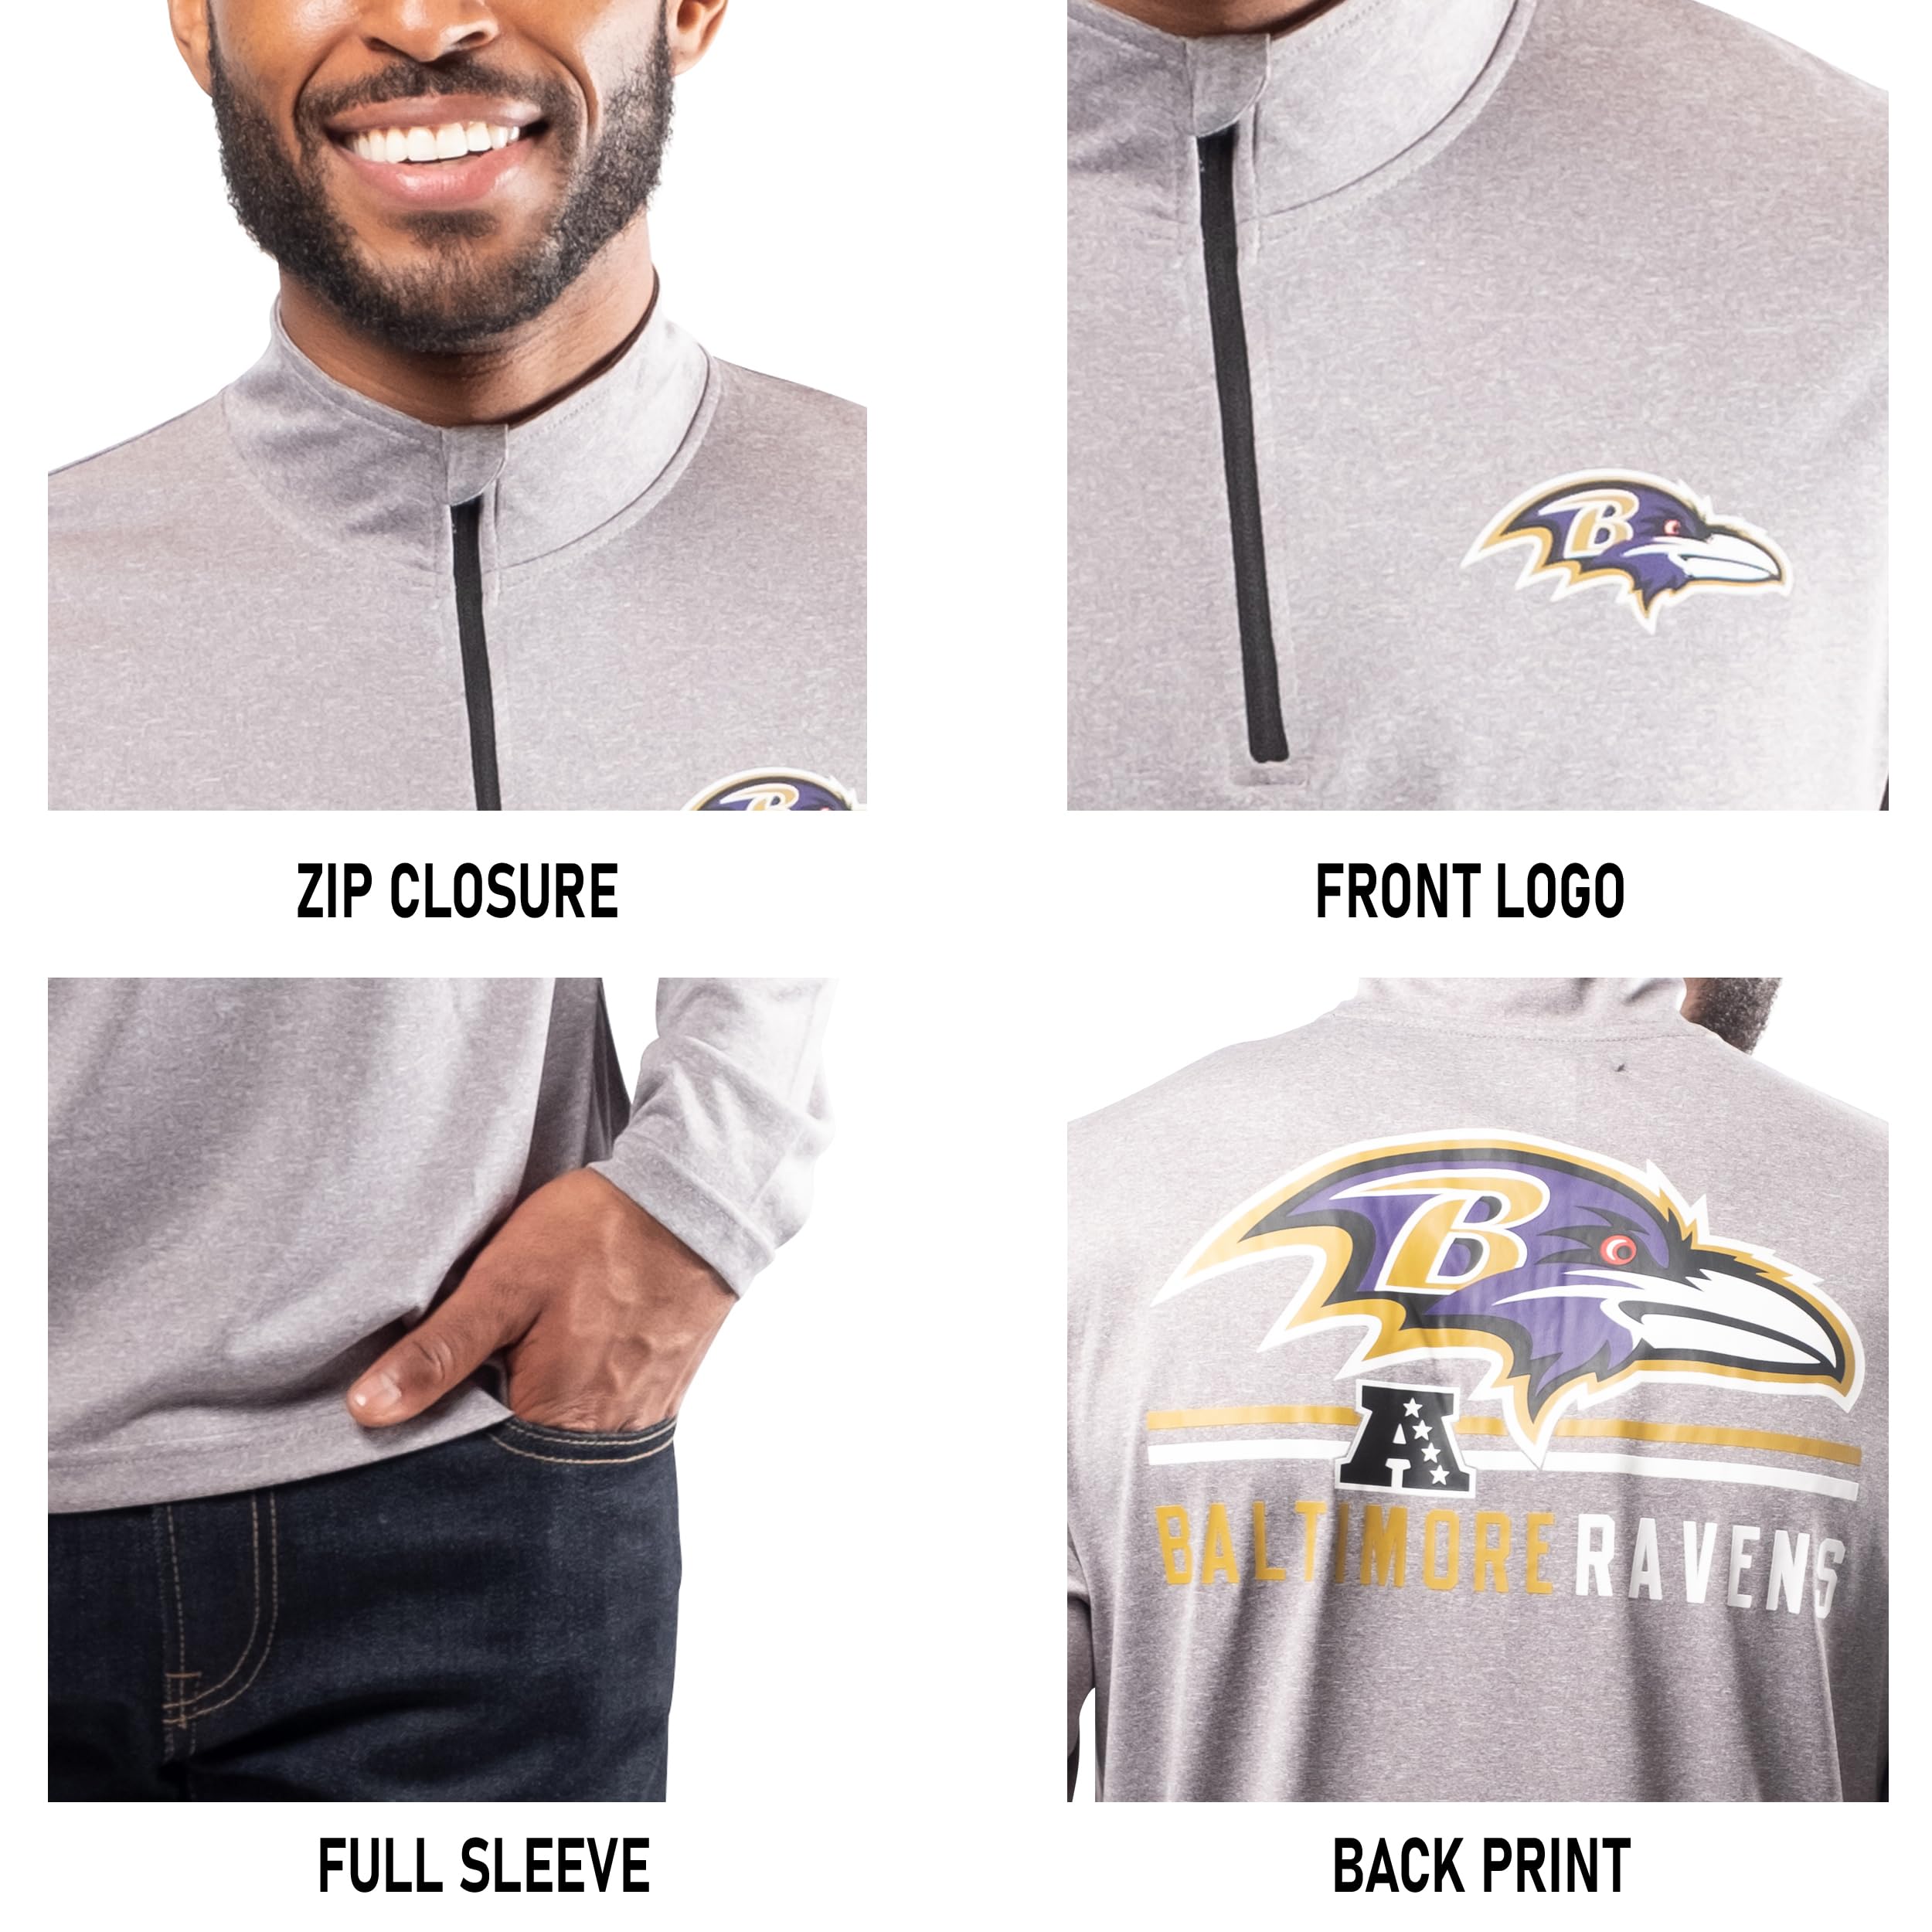 Ultra Game NFL Baltimore Ravens Mens Super Soft Quarter Zip Long Sleeve T-Shirt|Baltimore Ravens